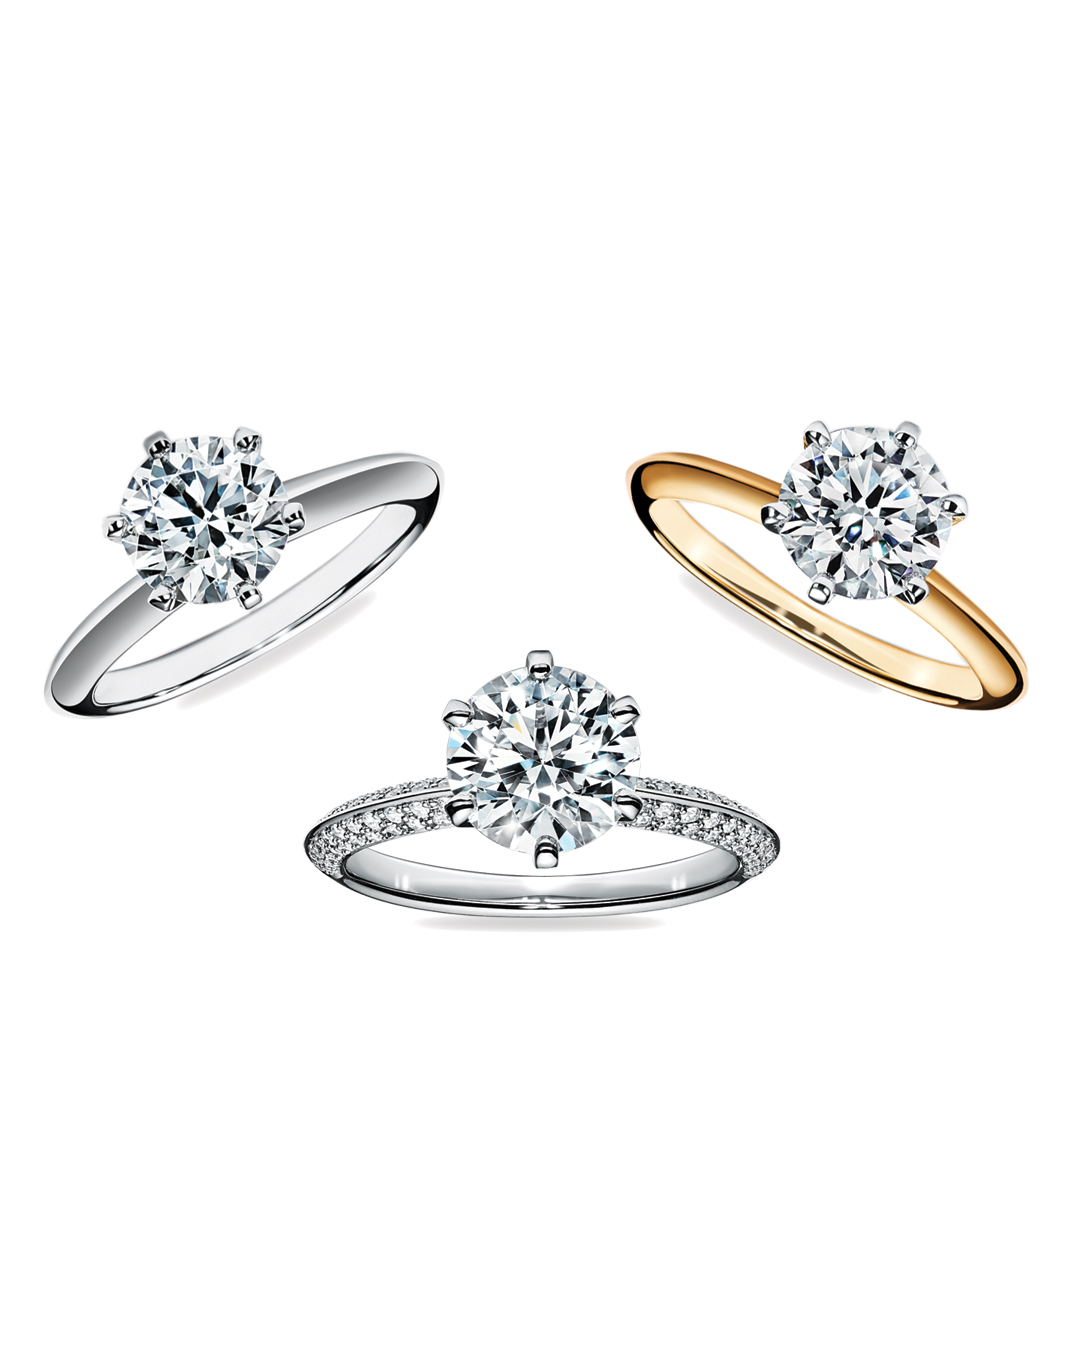 Platinum and yellow gold diamond engagement rings